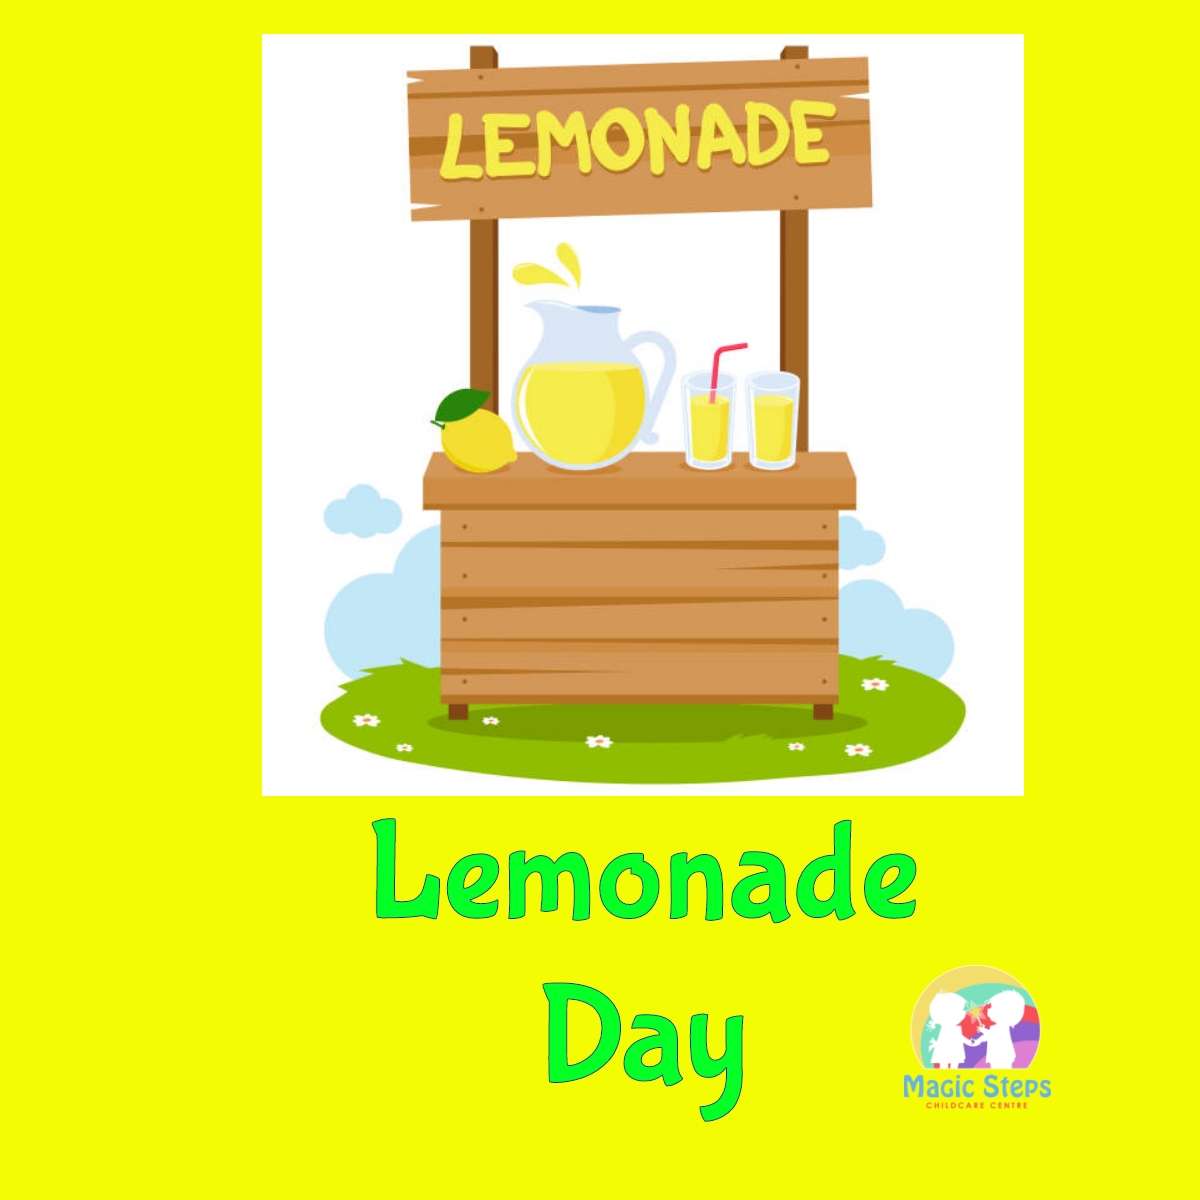 Lemonade Day- Wednesday 25th May